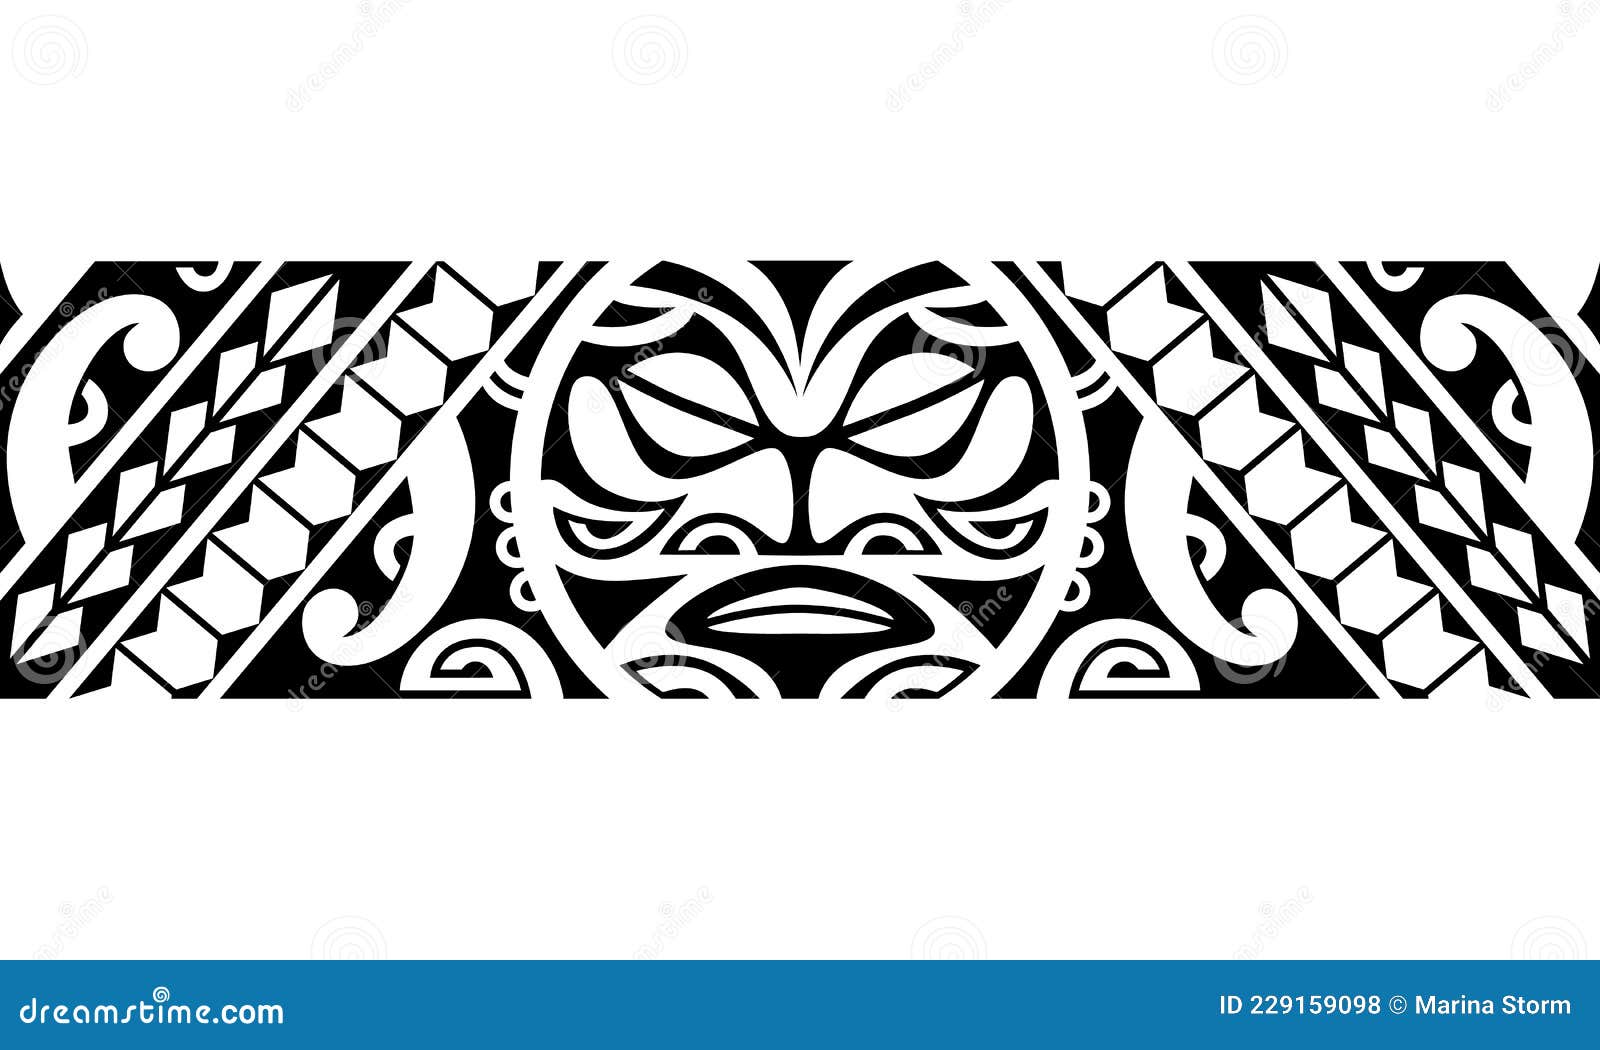 Bless international Tattoo Fabric By The Yard Pattern With Sea Turtles In  Maori Style Polynesian Swirly MotifsSquare  Wayfair